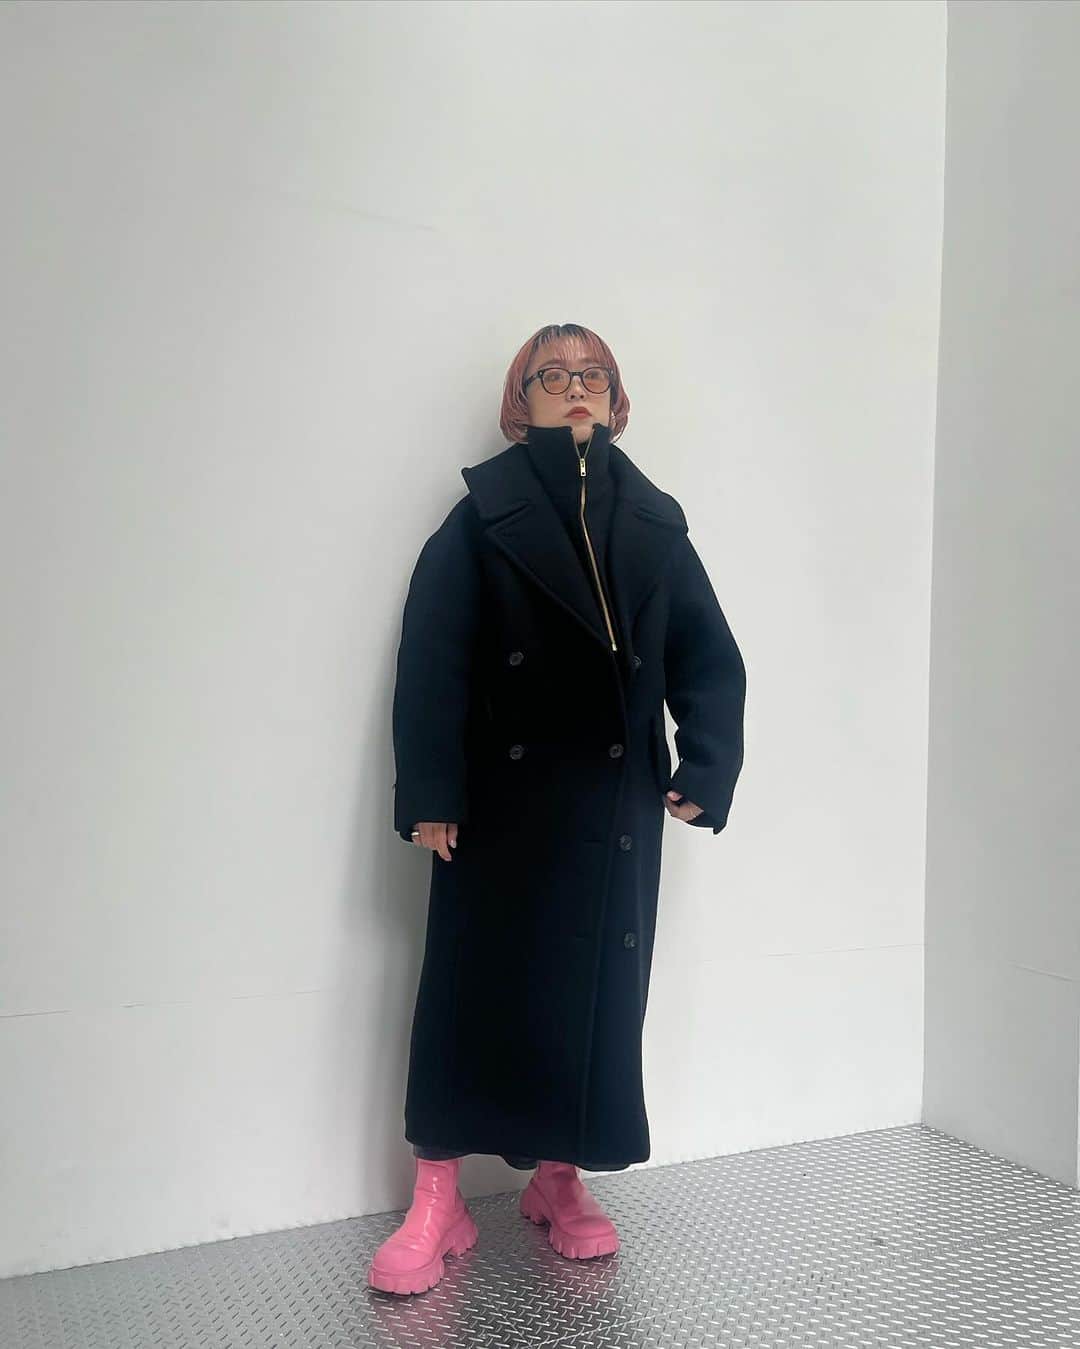 MIDWEST TOKYO WOMENのインスタグラム：「・ Lozza POPUP 12/15(fri) 〜 12/24(sun) @lozzaocchiali  @midwest_tm  @midwest_tw  ・ 【glasses】 sunglasses @lozzaocchiali  size free 着用品番 : 1-10-21-0818  【outer】 oversized coat with detachable collar @eenk_official  black / xsmall  【boots】 chelsea boots @vivianostudio × lost in echo black , pink / size 38,39  @midwest_official  staff 160cm  ______ ______ ______ ______  MIDWEST TOKYO 東京都渋谷区神南1-6-1 ☎︎03-5428-3171 ✉︎tokyo_w@midwest.jp  月〜土 12:00〜20:00 日・祝 11:00〜19:00  商品に関してのご質問、その他ございましたら お気軽にコメント、DMください。」